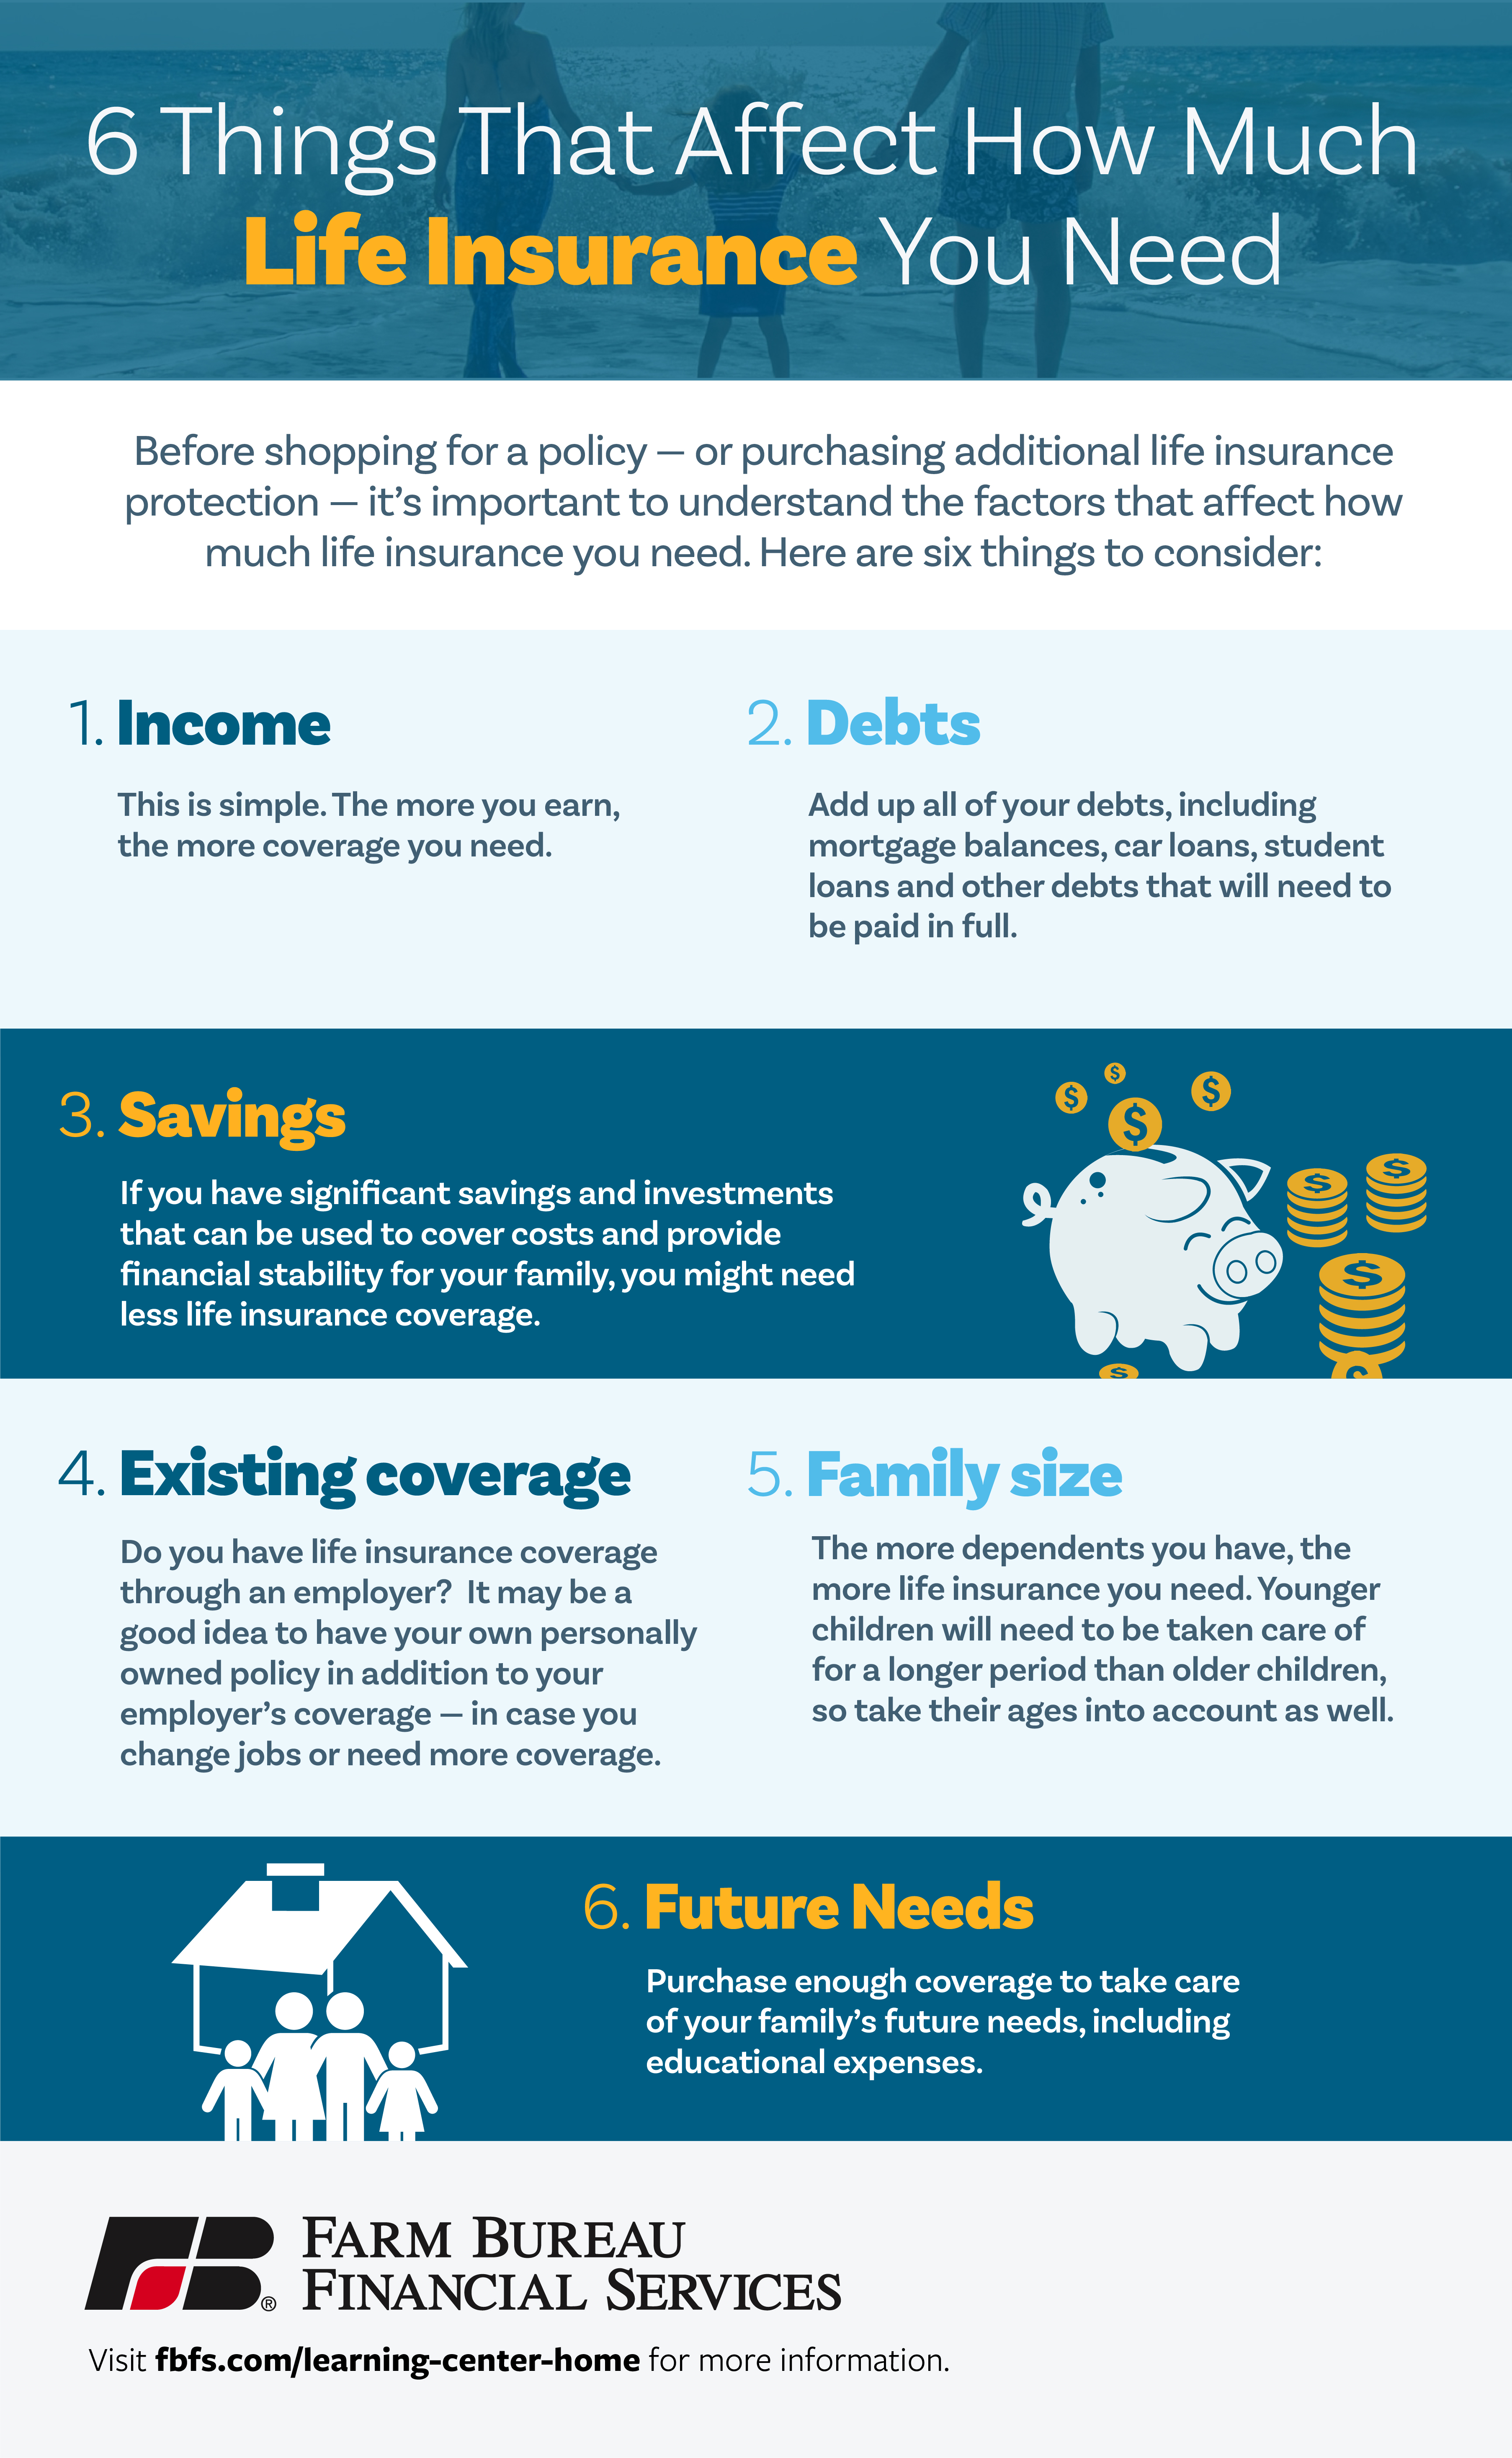 How Much Life Insurance Do You Need? - Farm Bureau Financial Services